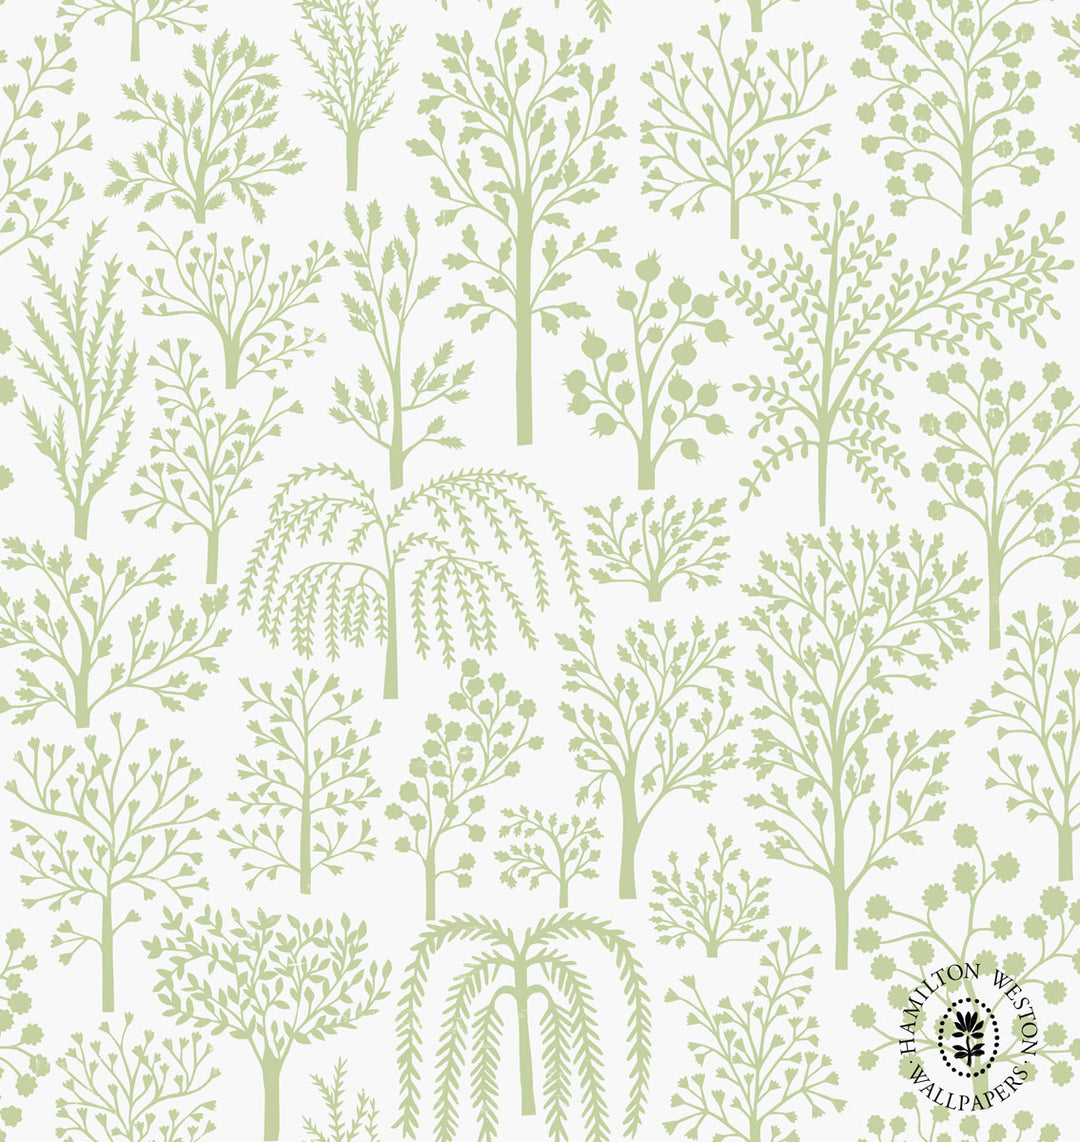 Hamilton-weston-wallpaper-Alice-Pattullo-Arboretum-hand-paper-cutting-Broadbean-on-chalk-APARB05-traditional-stlye-pattern-country-trees